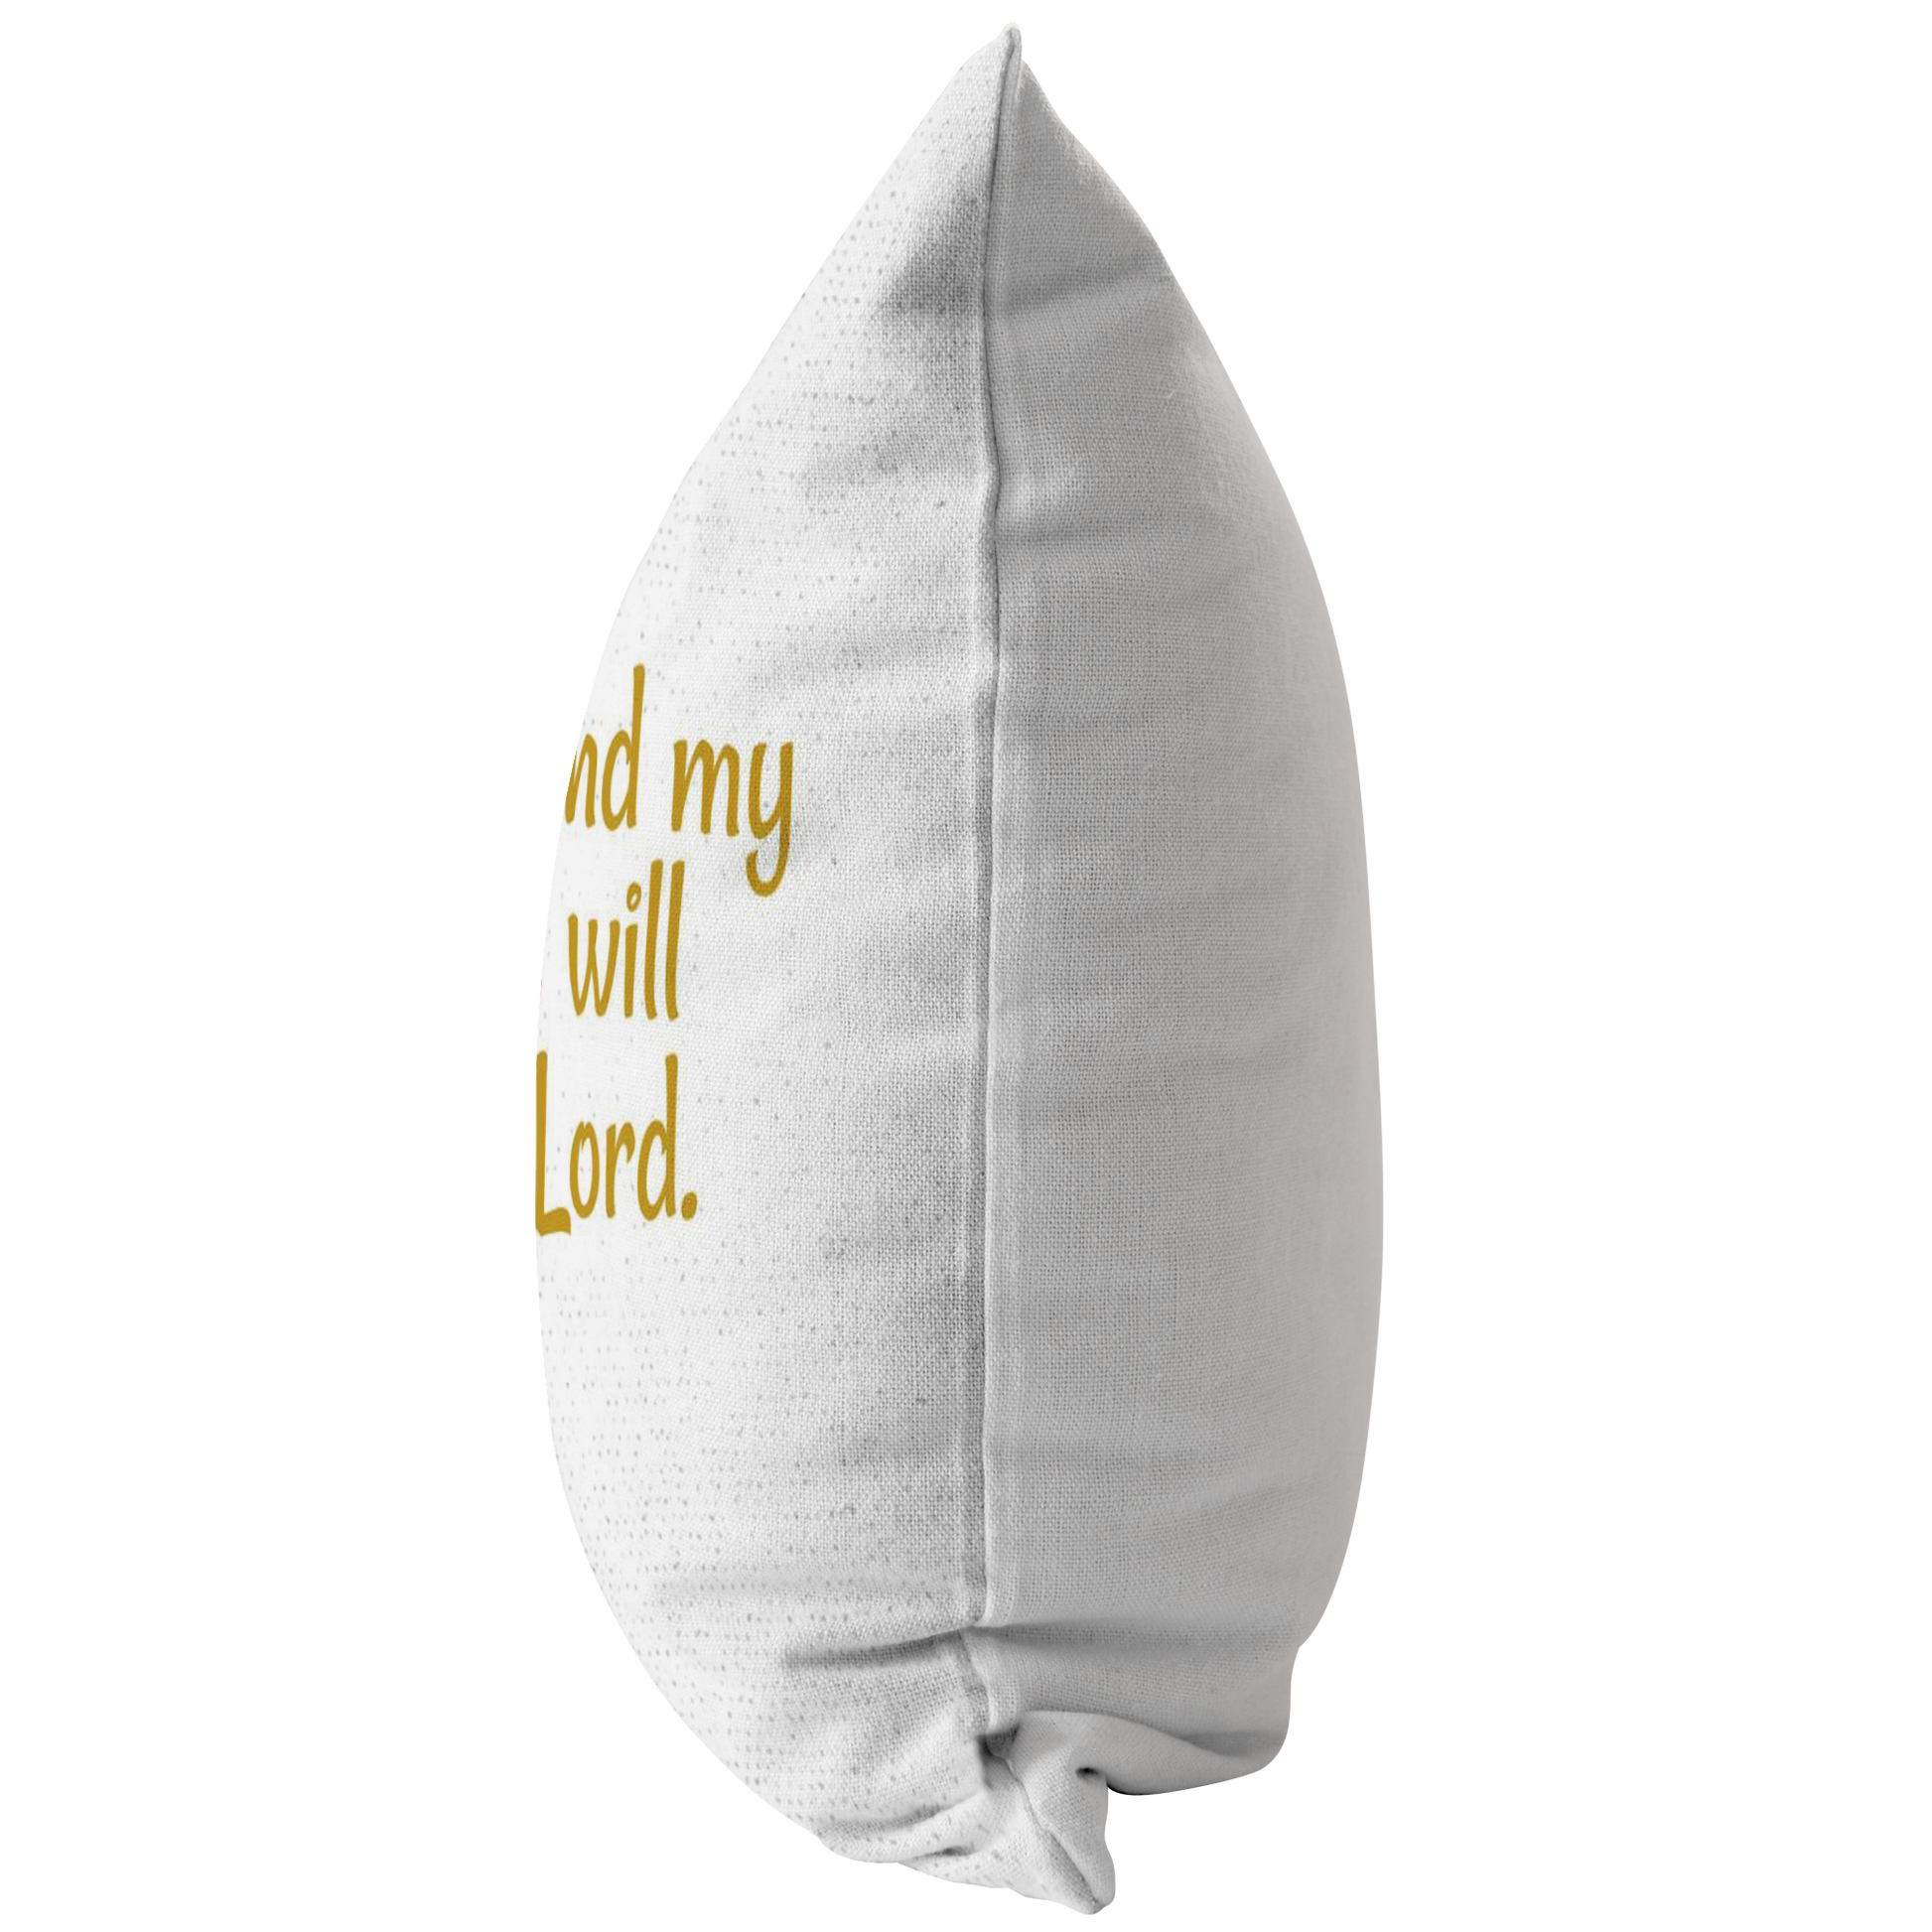 Joshua 24:15 Pillow